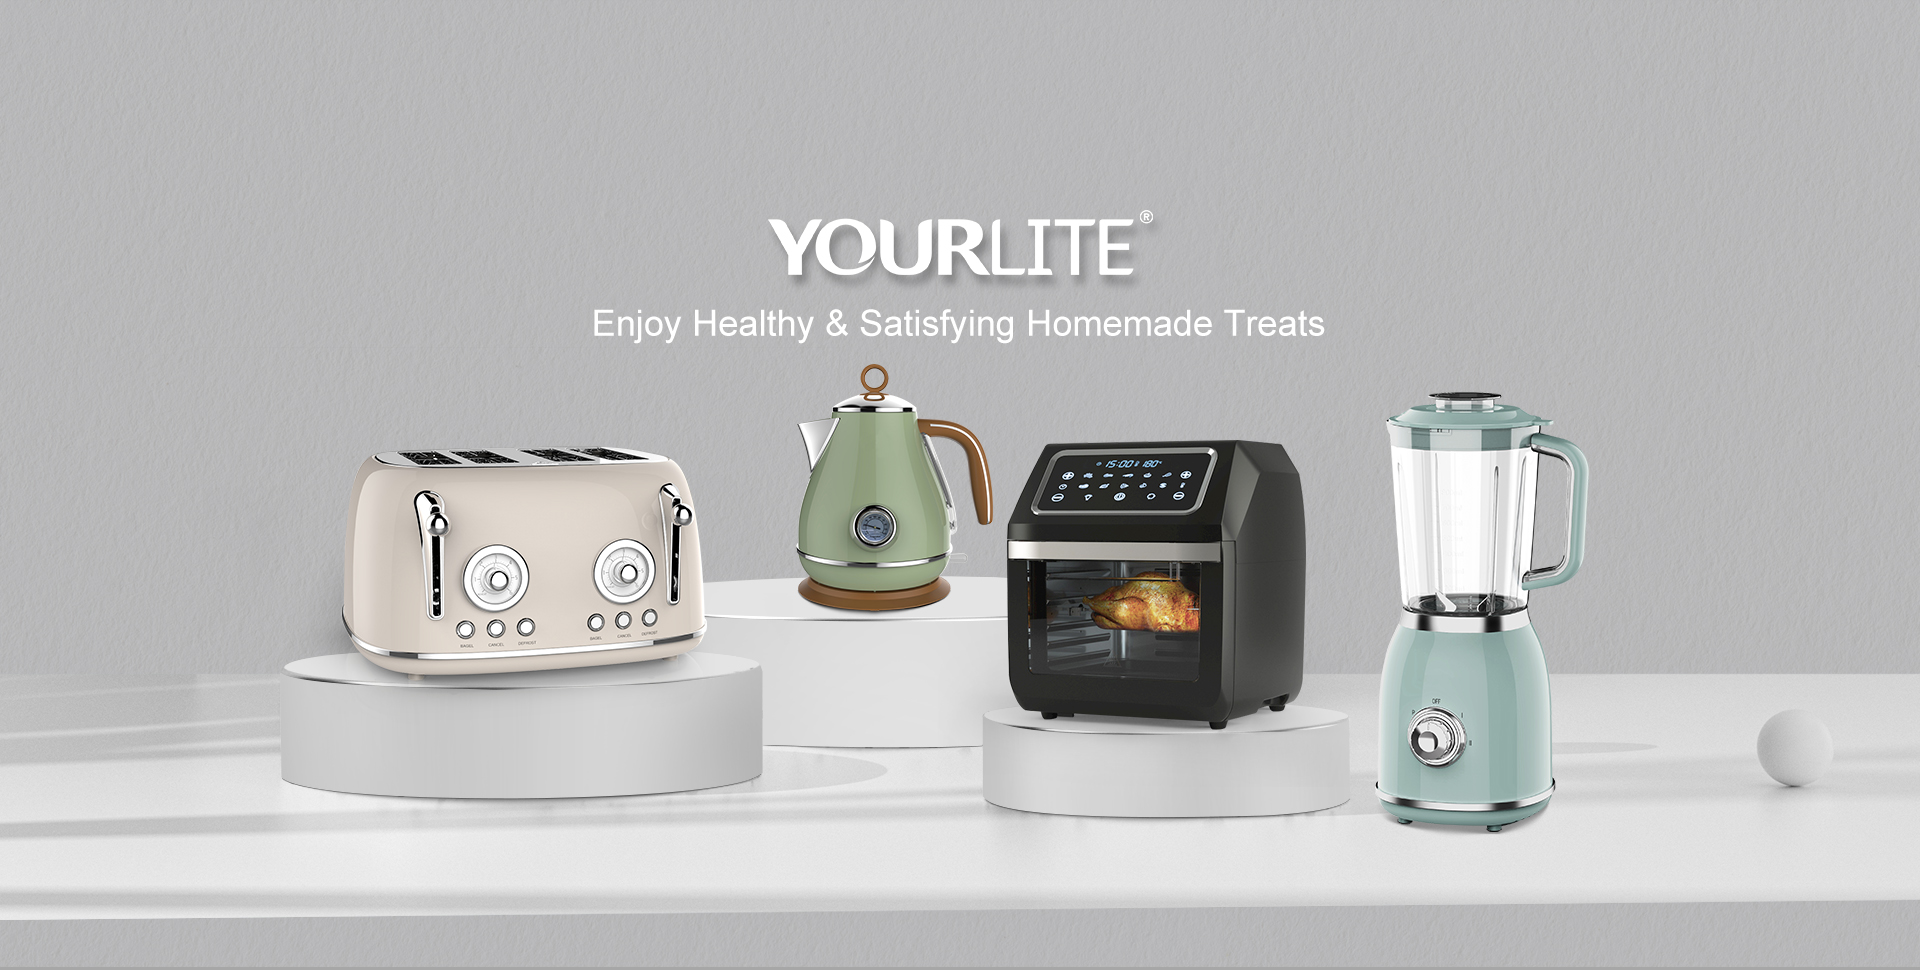 Household Appliances, Kitchen Appliances, Smart Cleaning Appliances - Puluomis